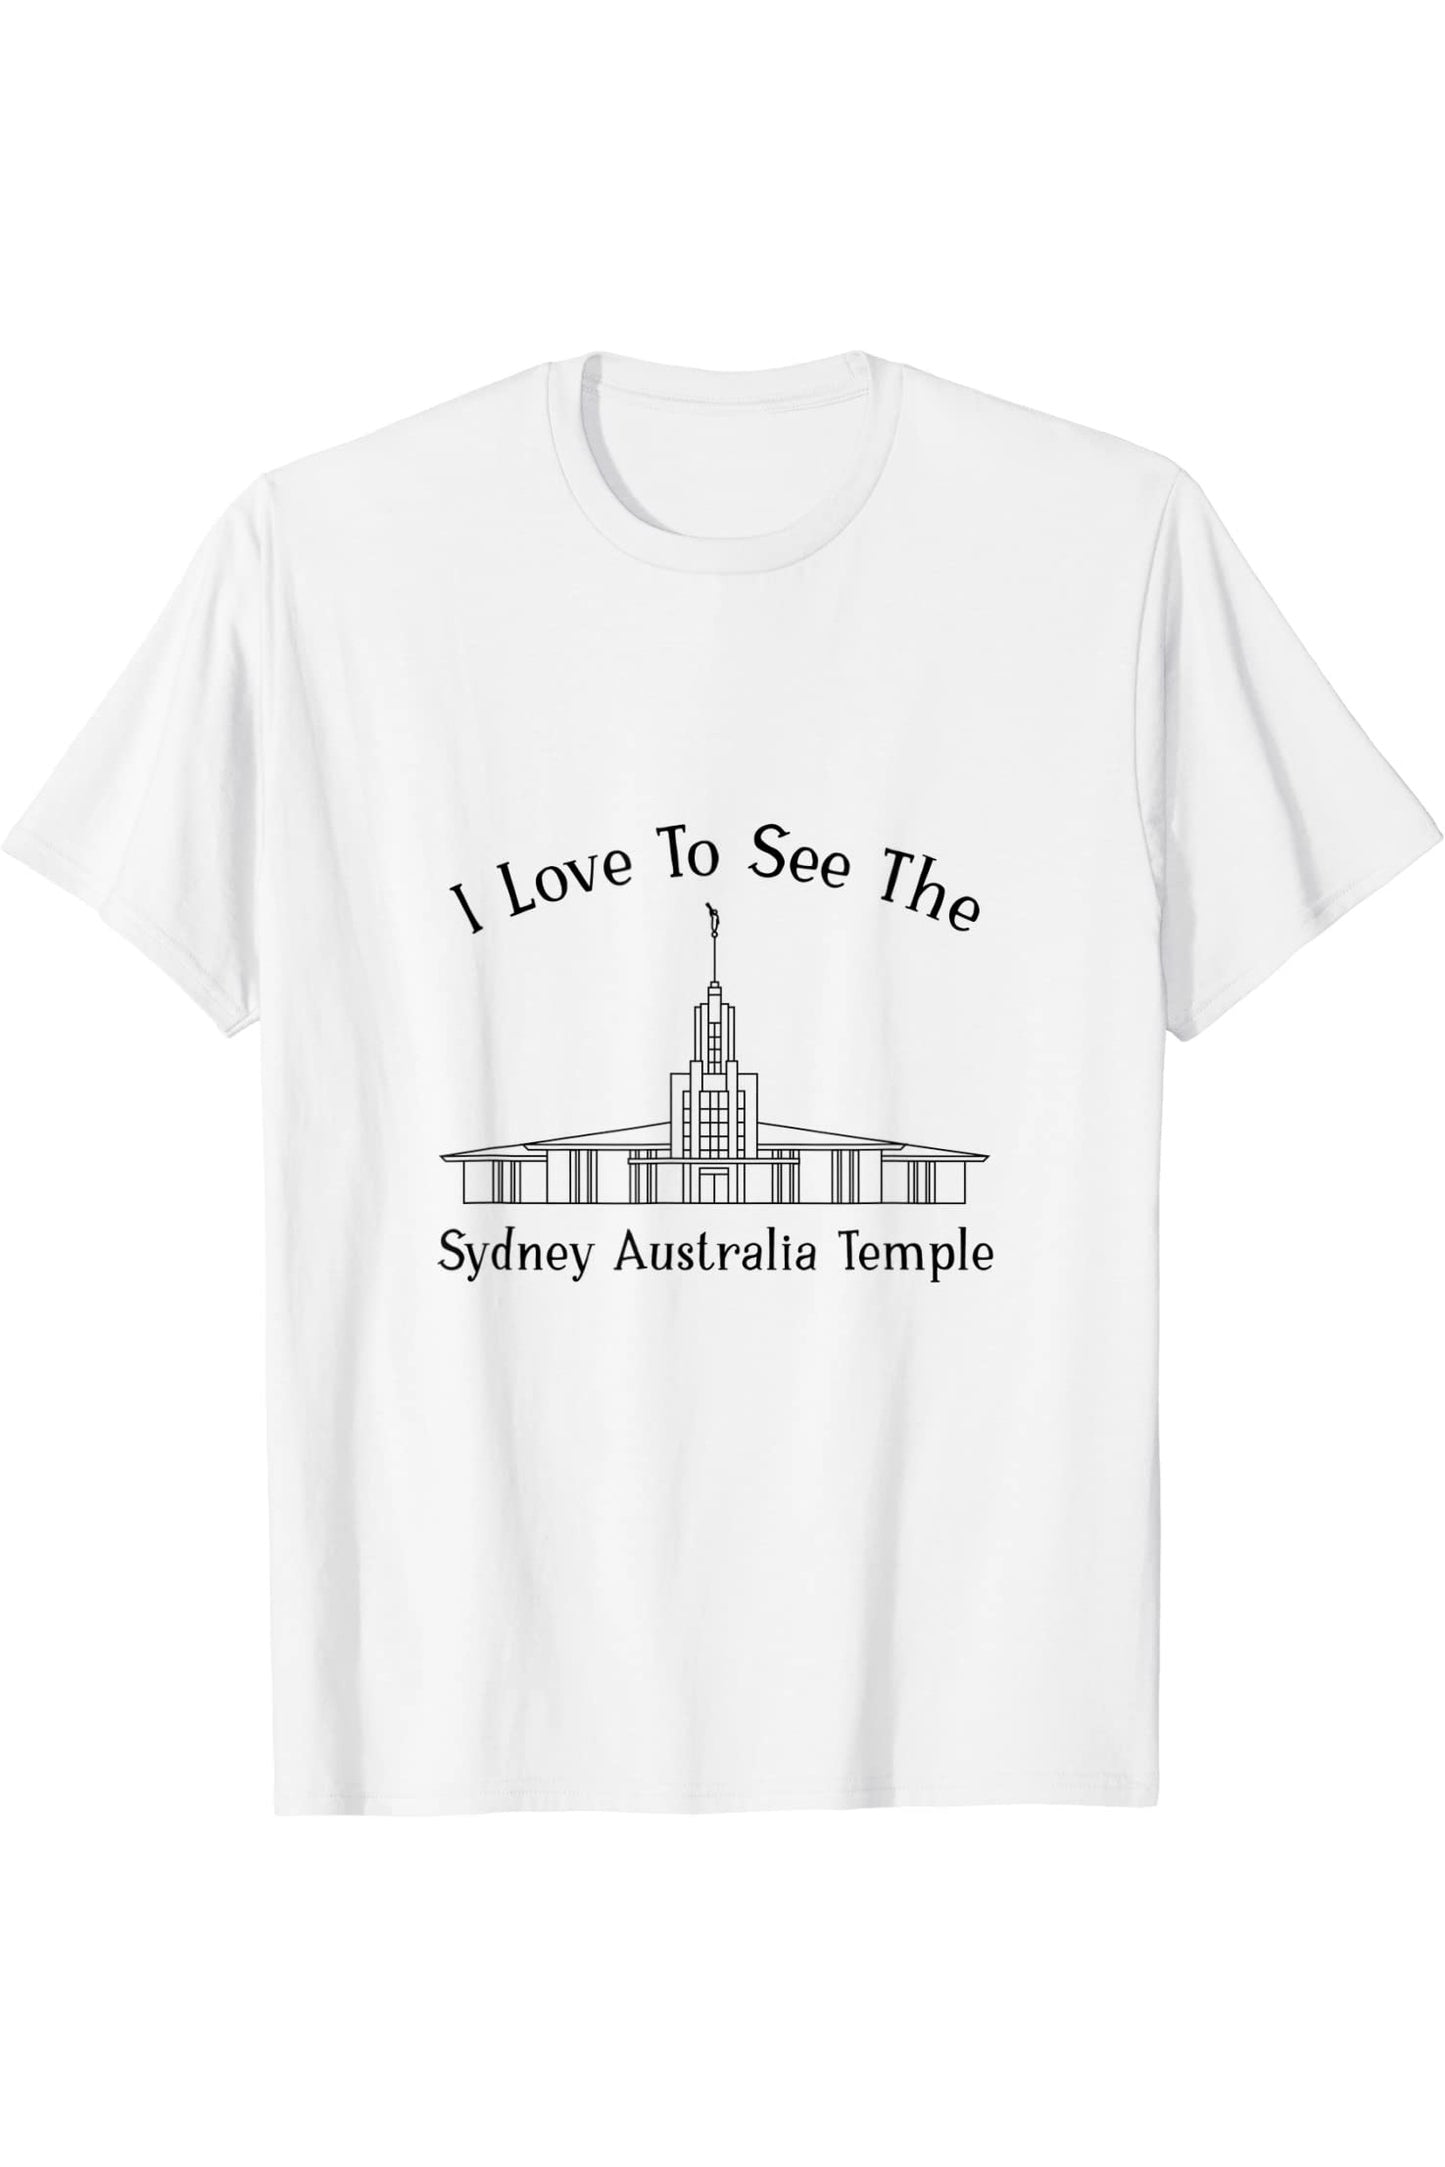 Sydney Australia Temple T-Shirt - Happy Style (English) US